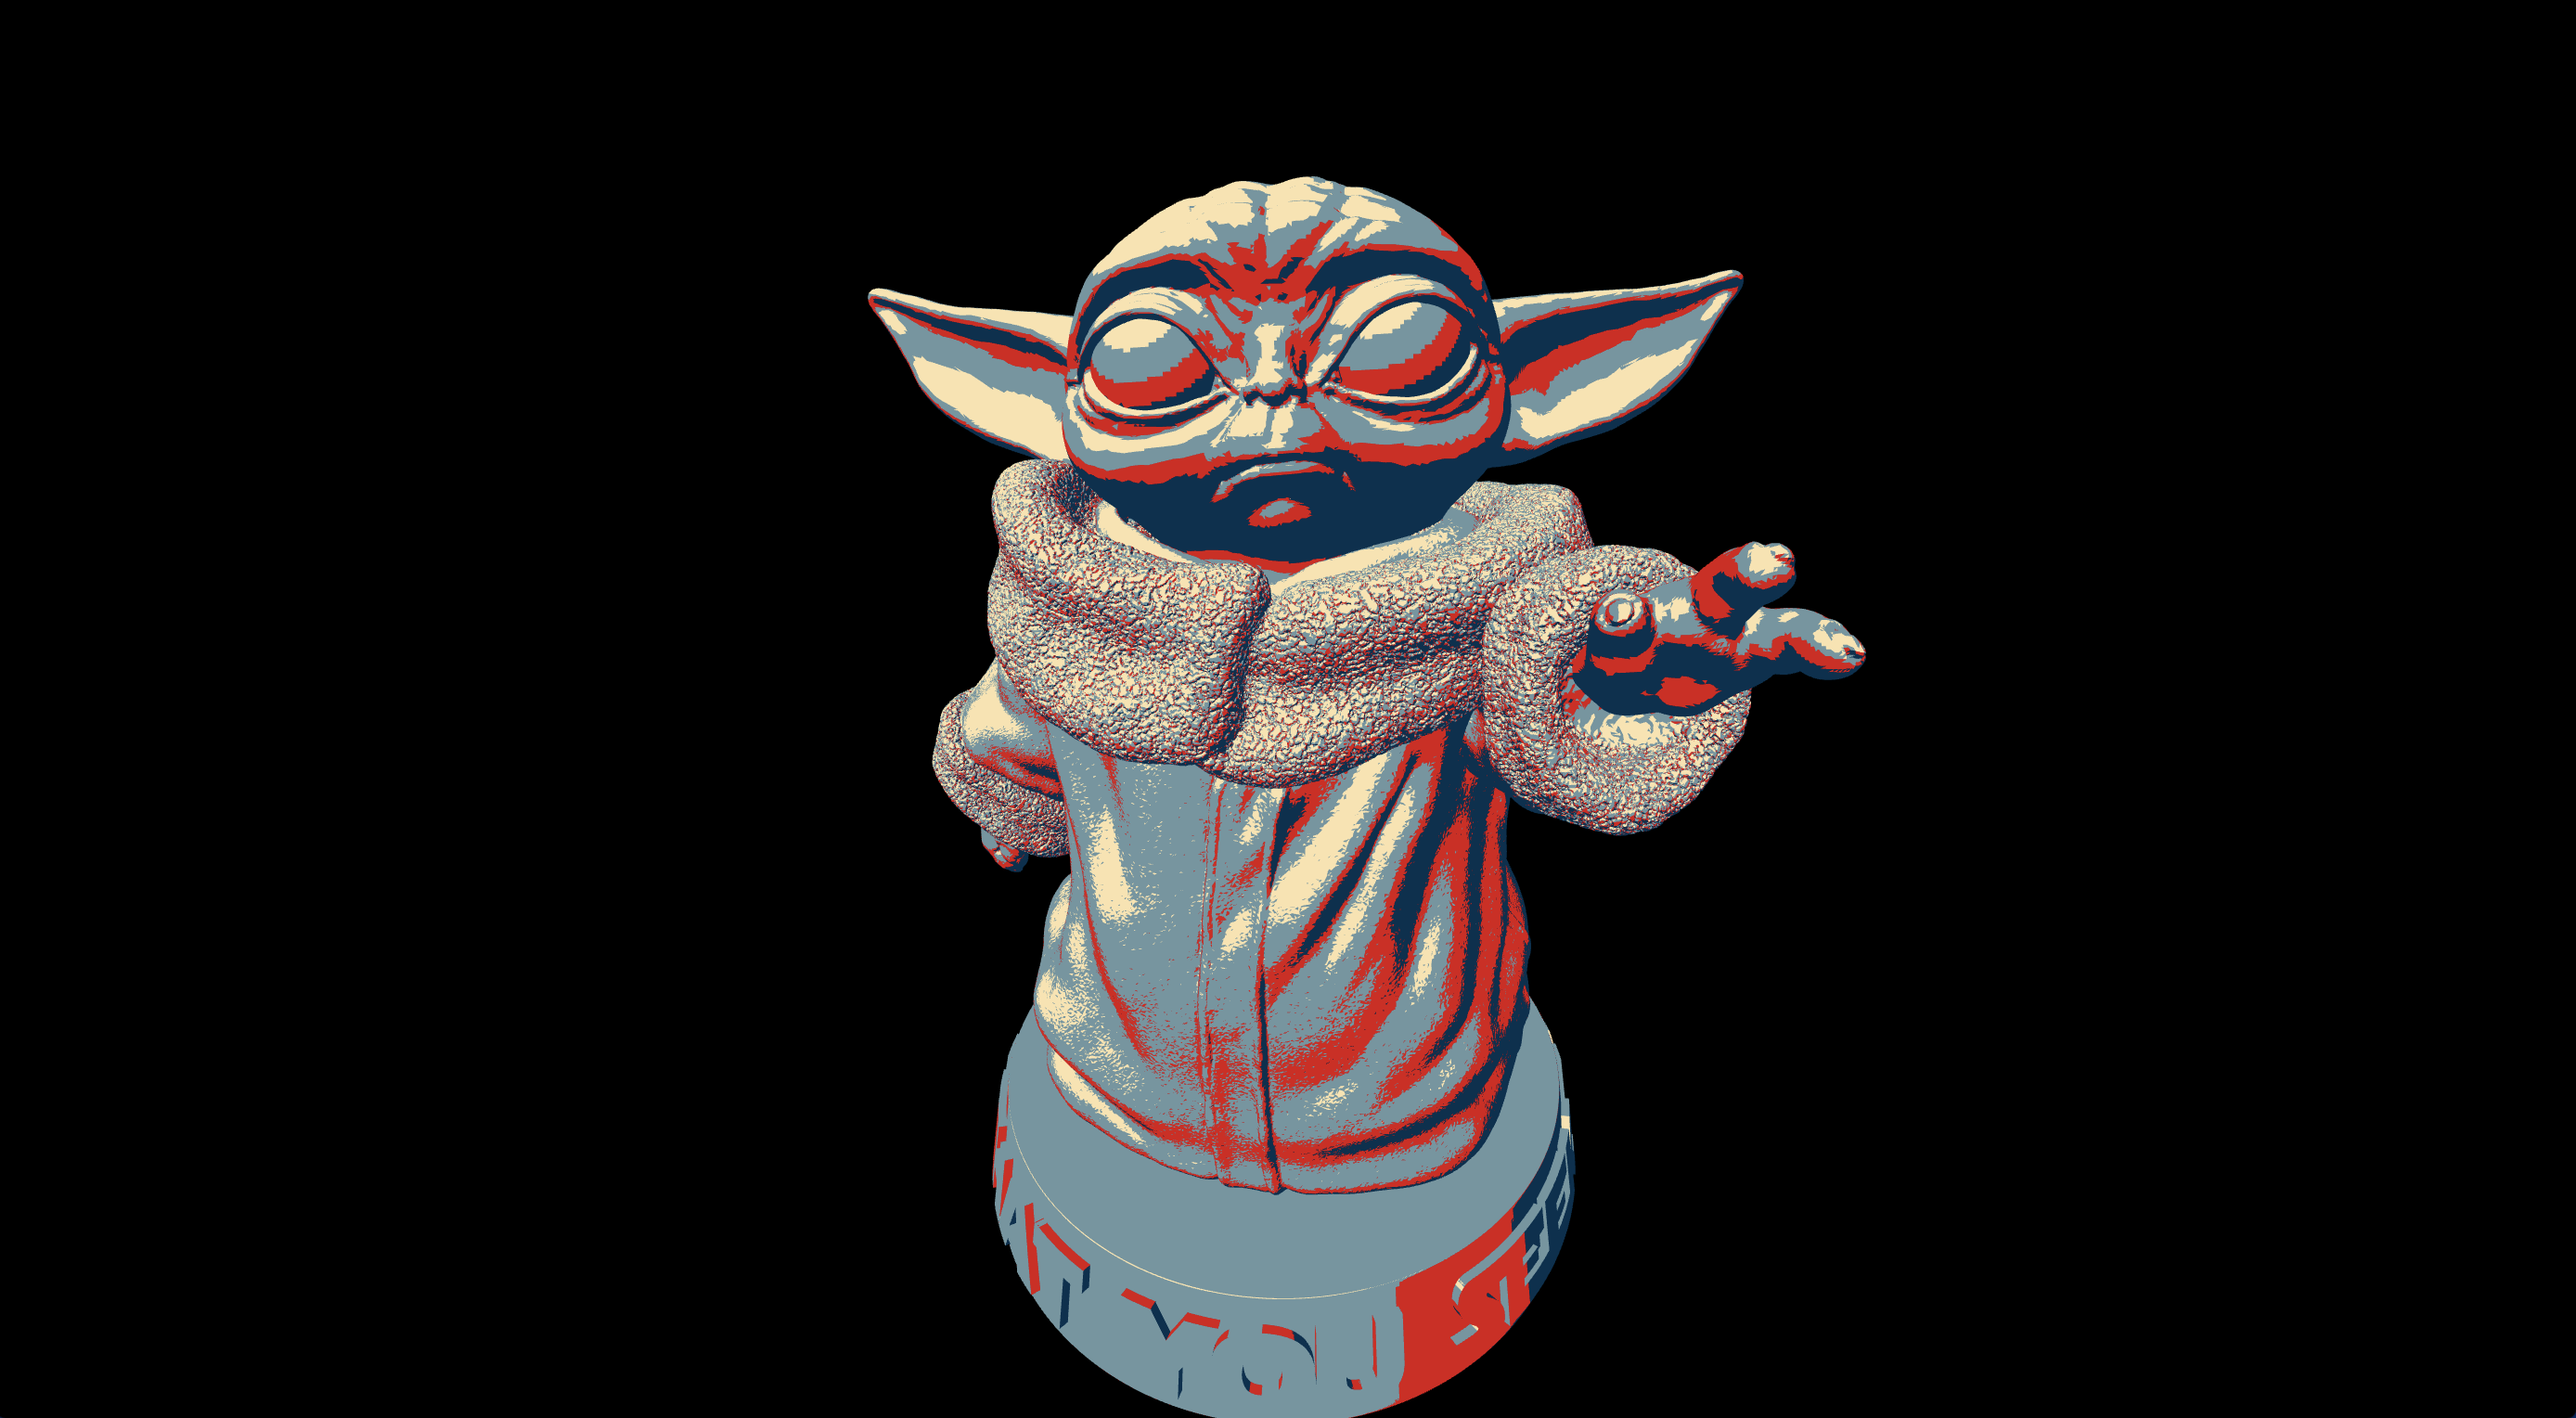 Baby Yoda model with hope shader and aliasing